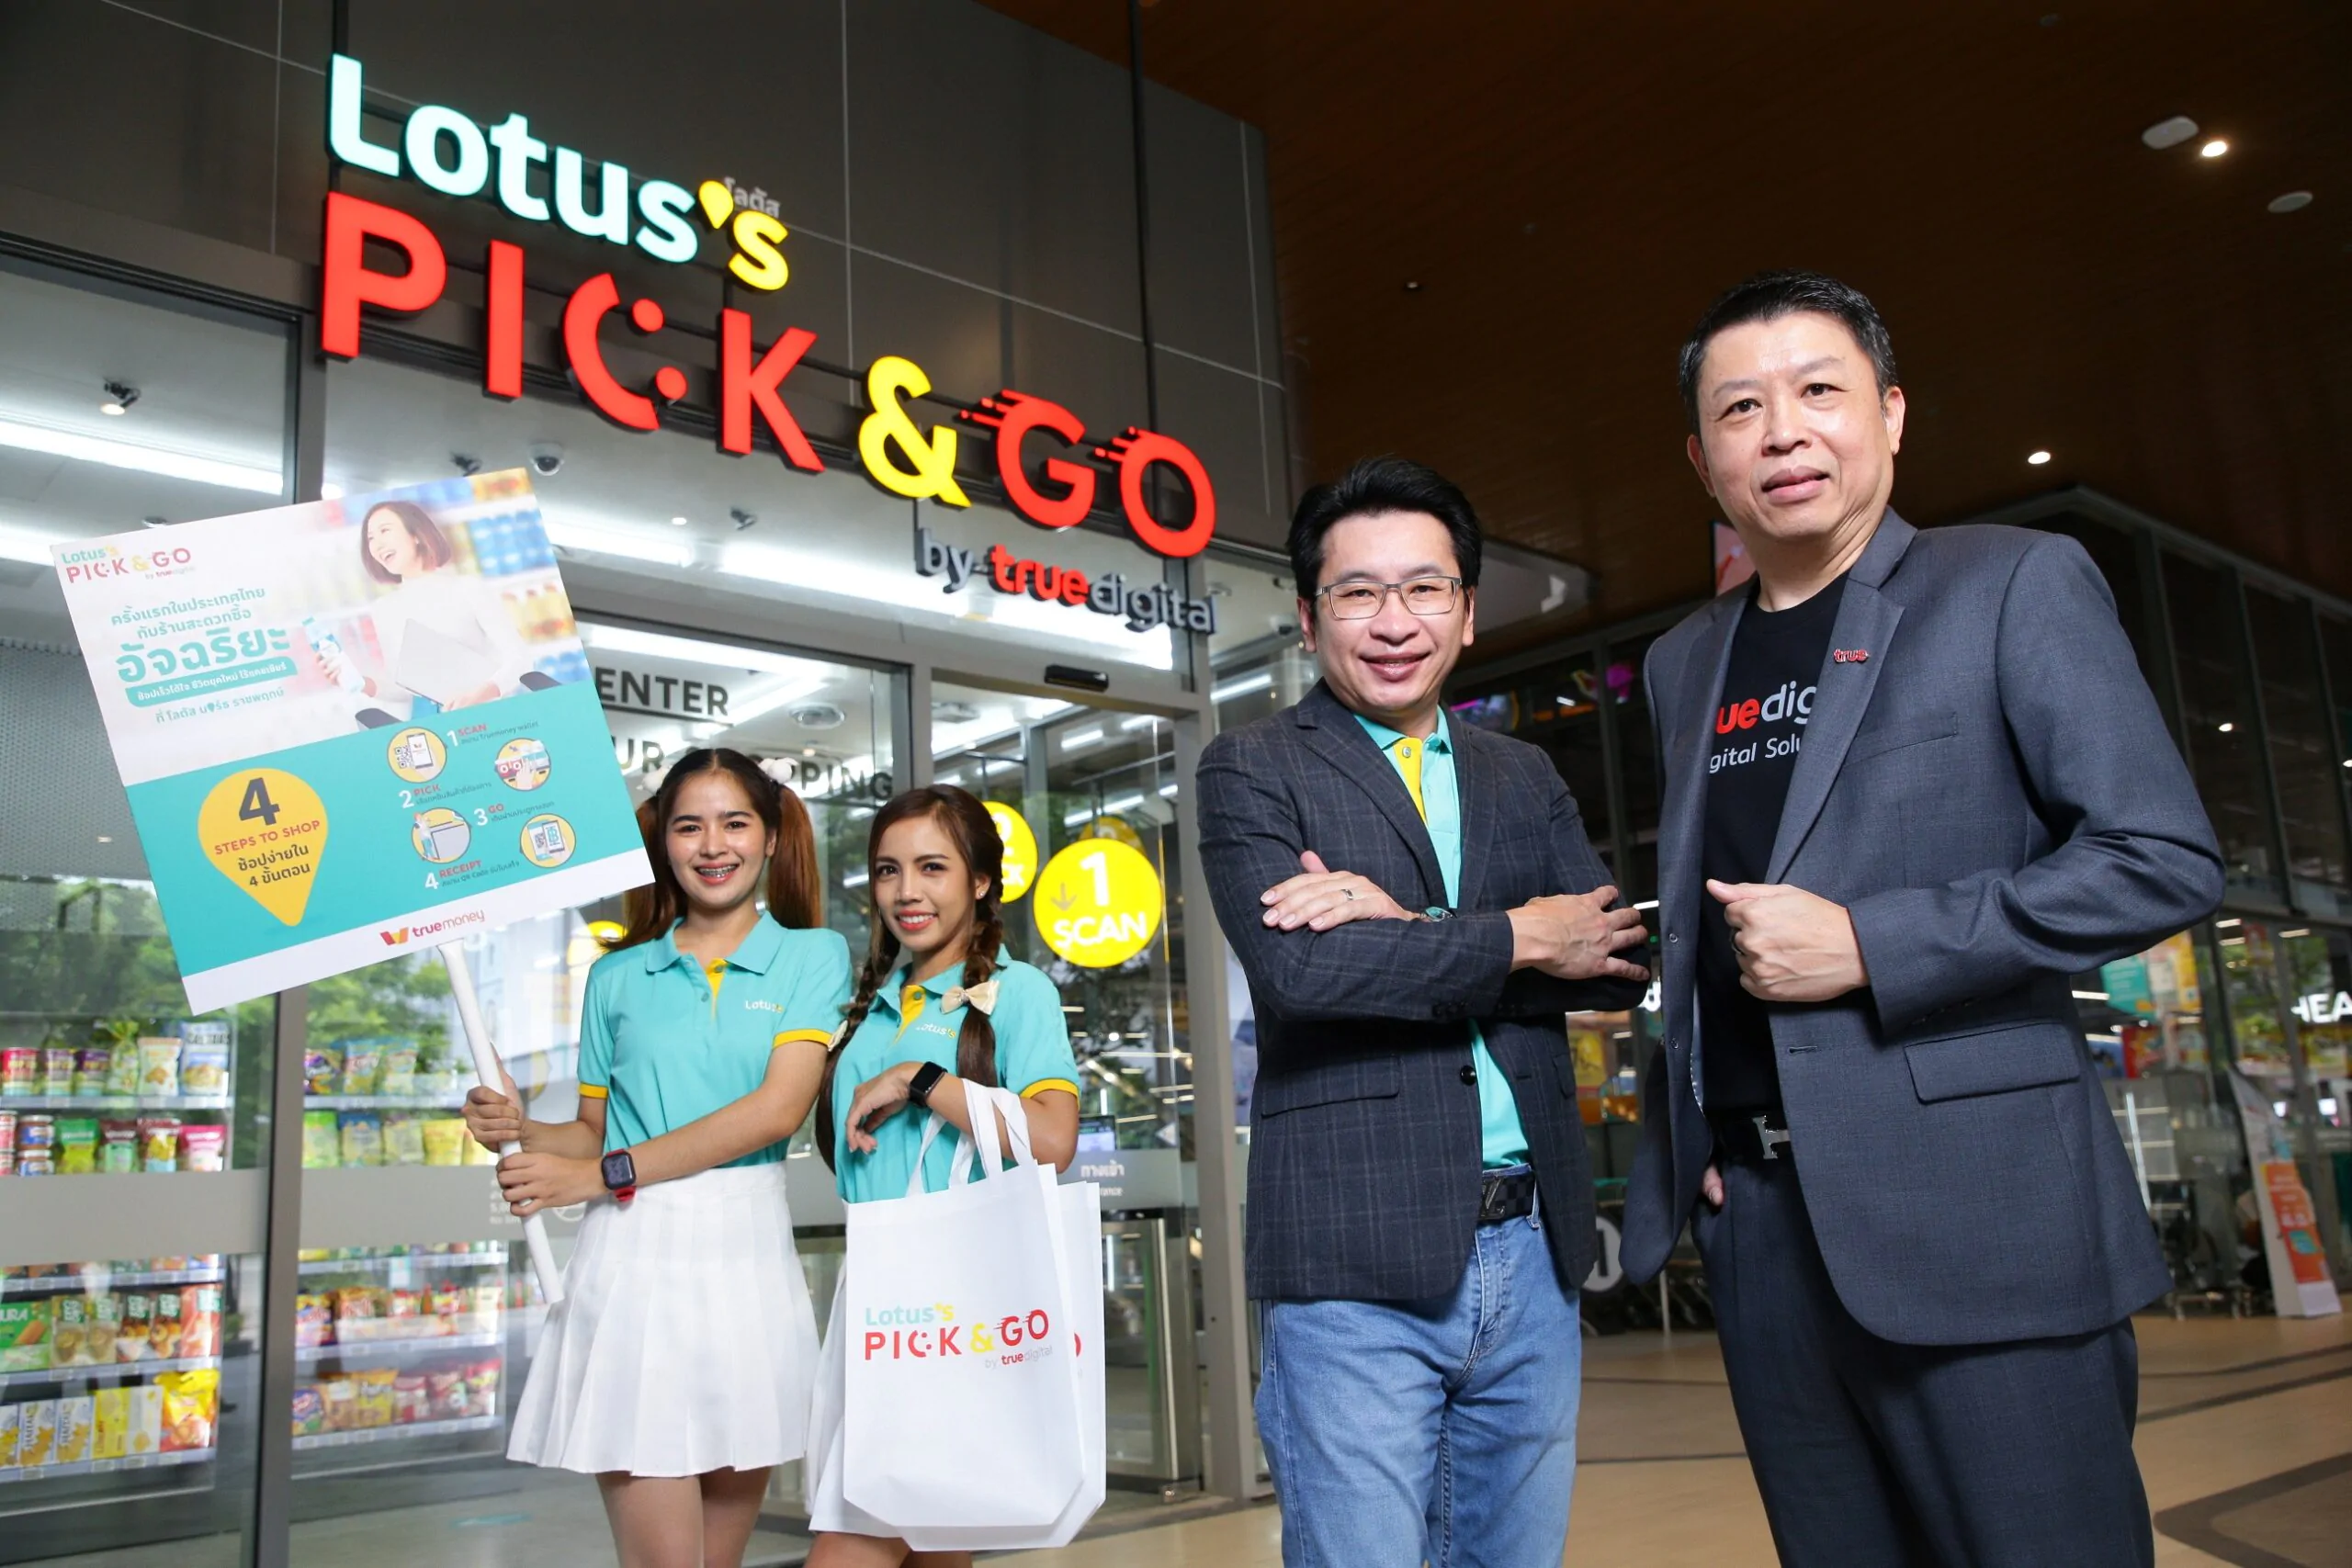 123 3 Lotuss PICK GO by True Digital scaled | Lotus’s | แห่งแรกในไทย! โลตัสร่วมกับทรู เปิดตัว Lotus’s ไร้พนักงาน หยิบสินค้าแล้วเดินออก